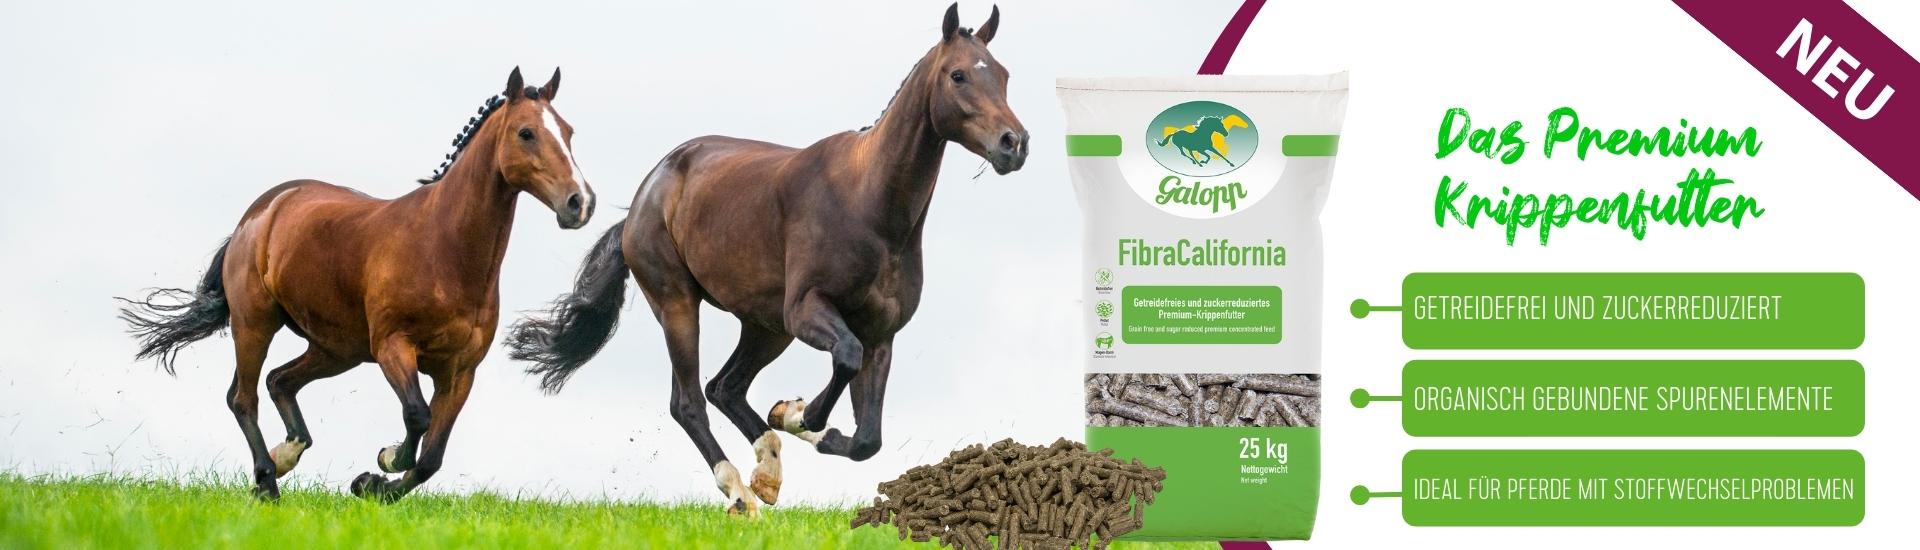 Neu: Fibra California - Galopp Premium Krippenfutter für Pferde